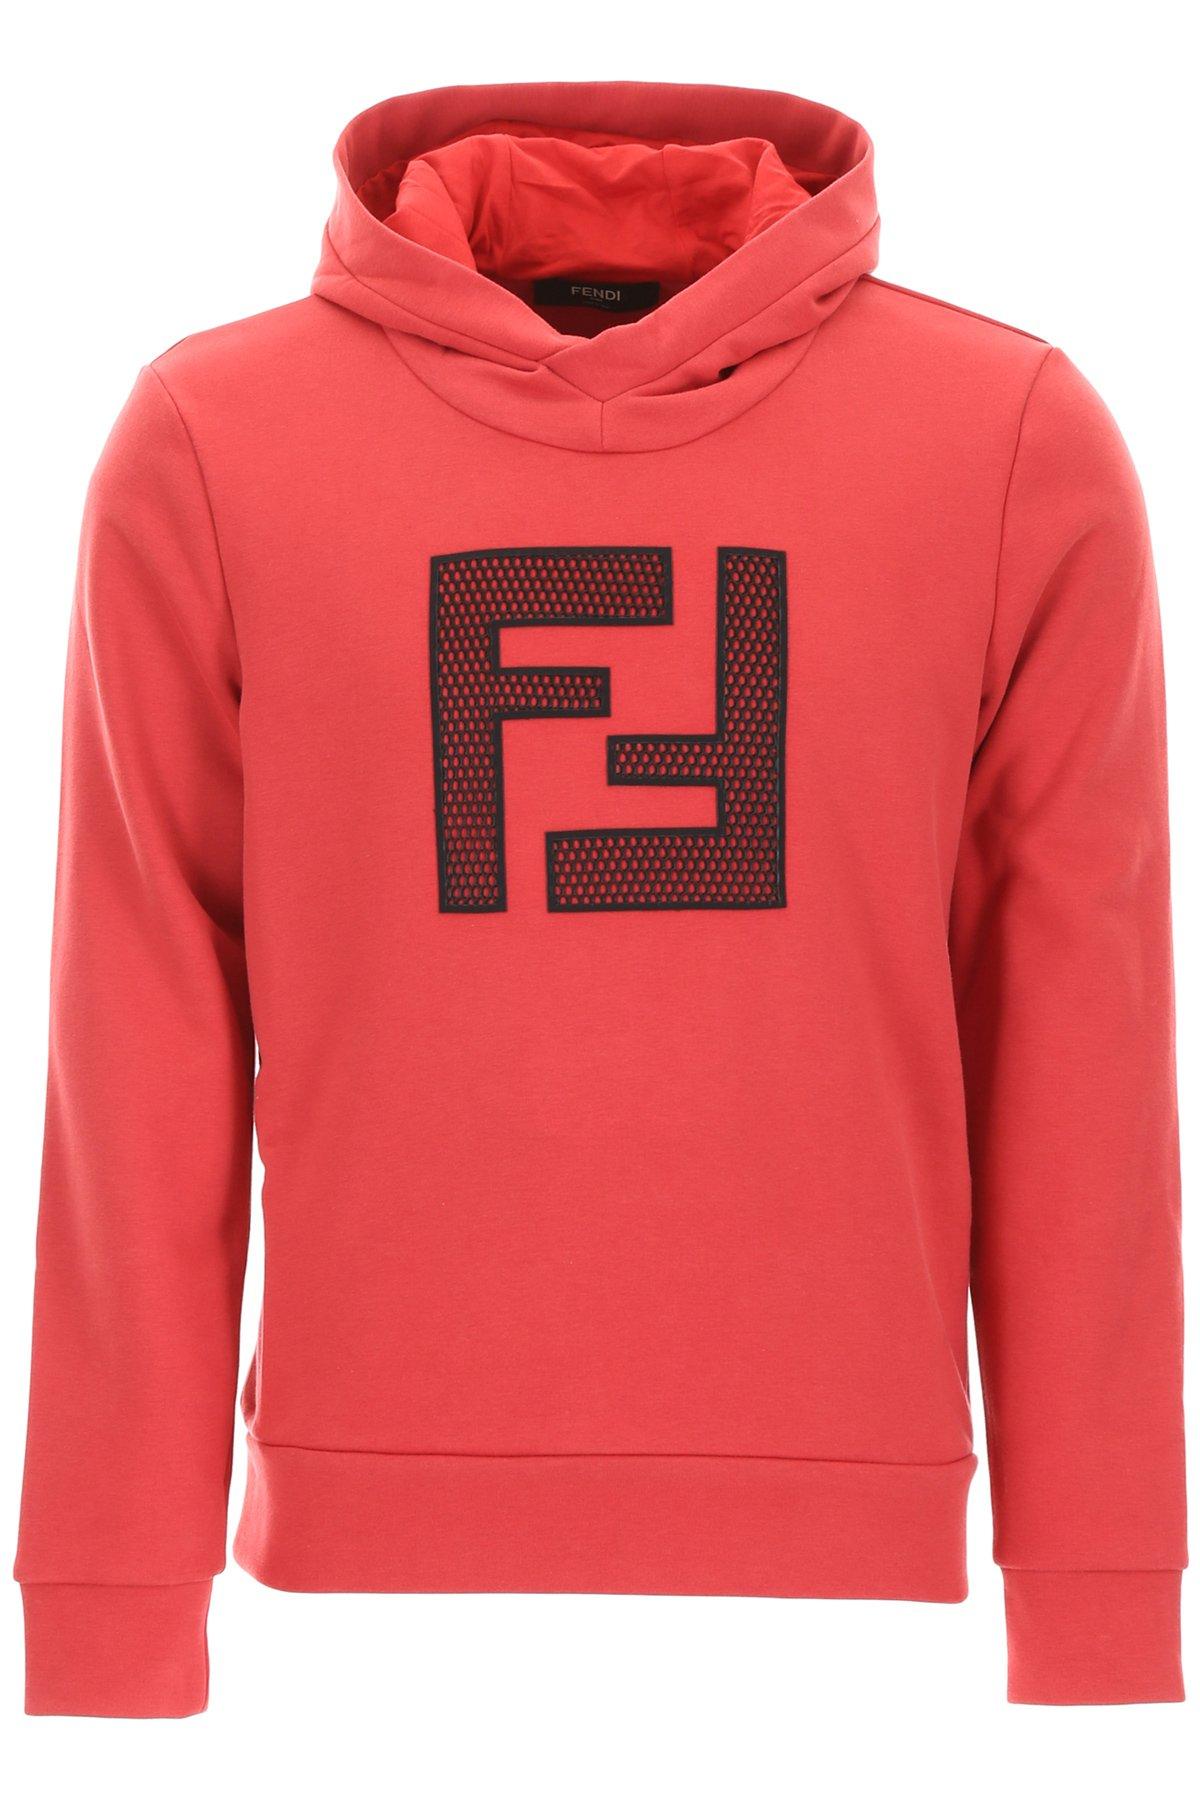 Fendi Cotton Logo Hoodie in Red for Men 